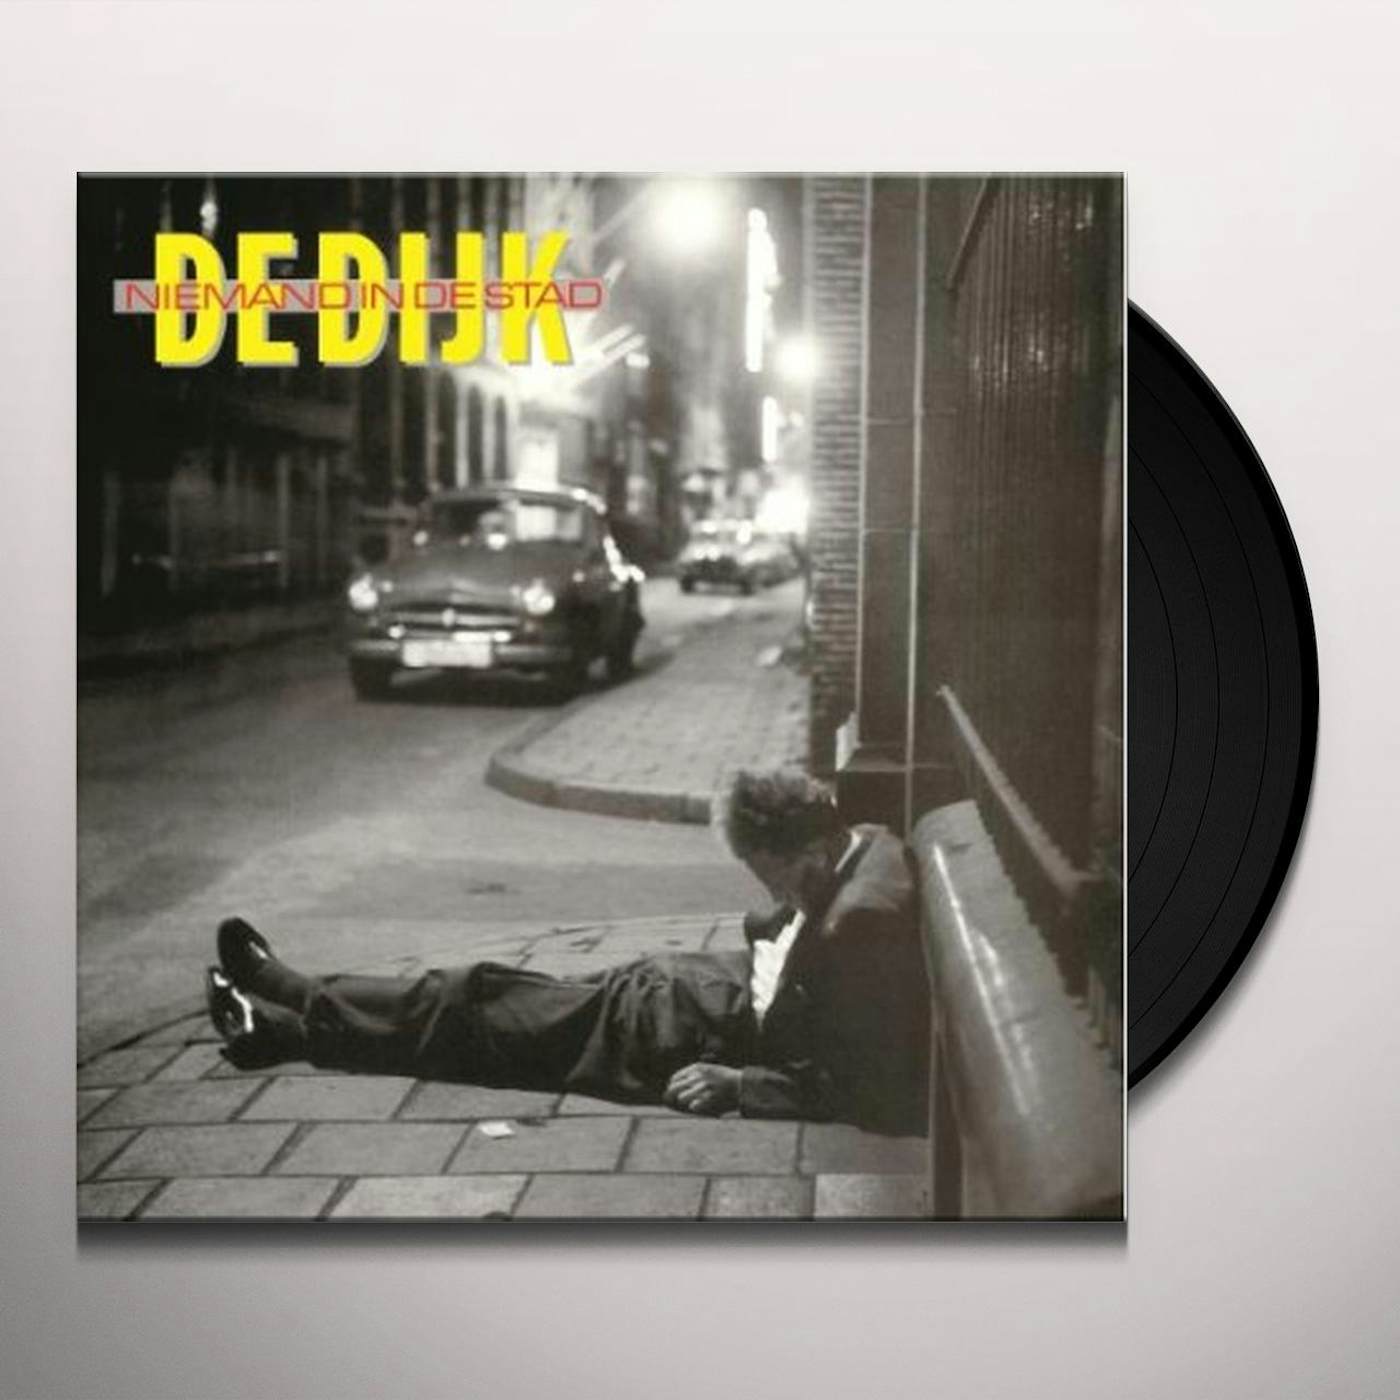 De Dijk NIEMAND IN DE STAD Vinyl Record - 180 Gram Pressing